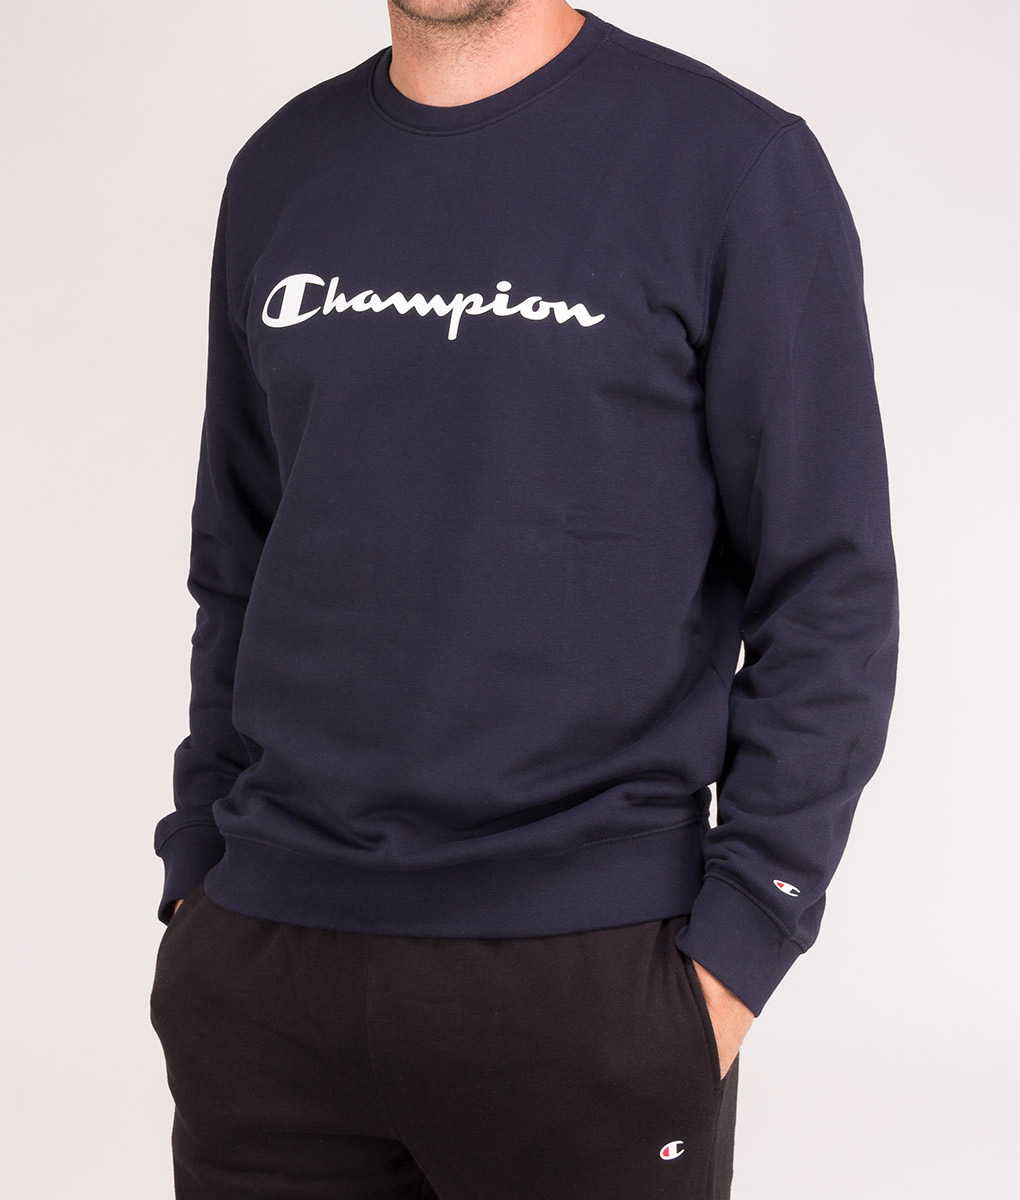 mens champion hoodie navy